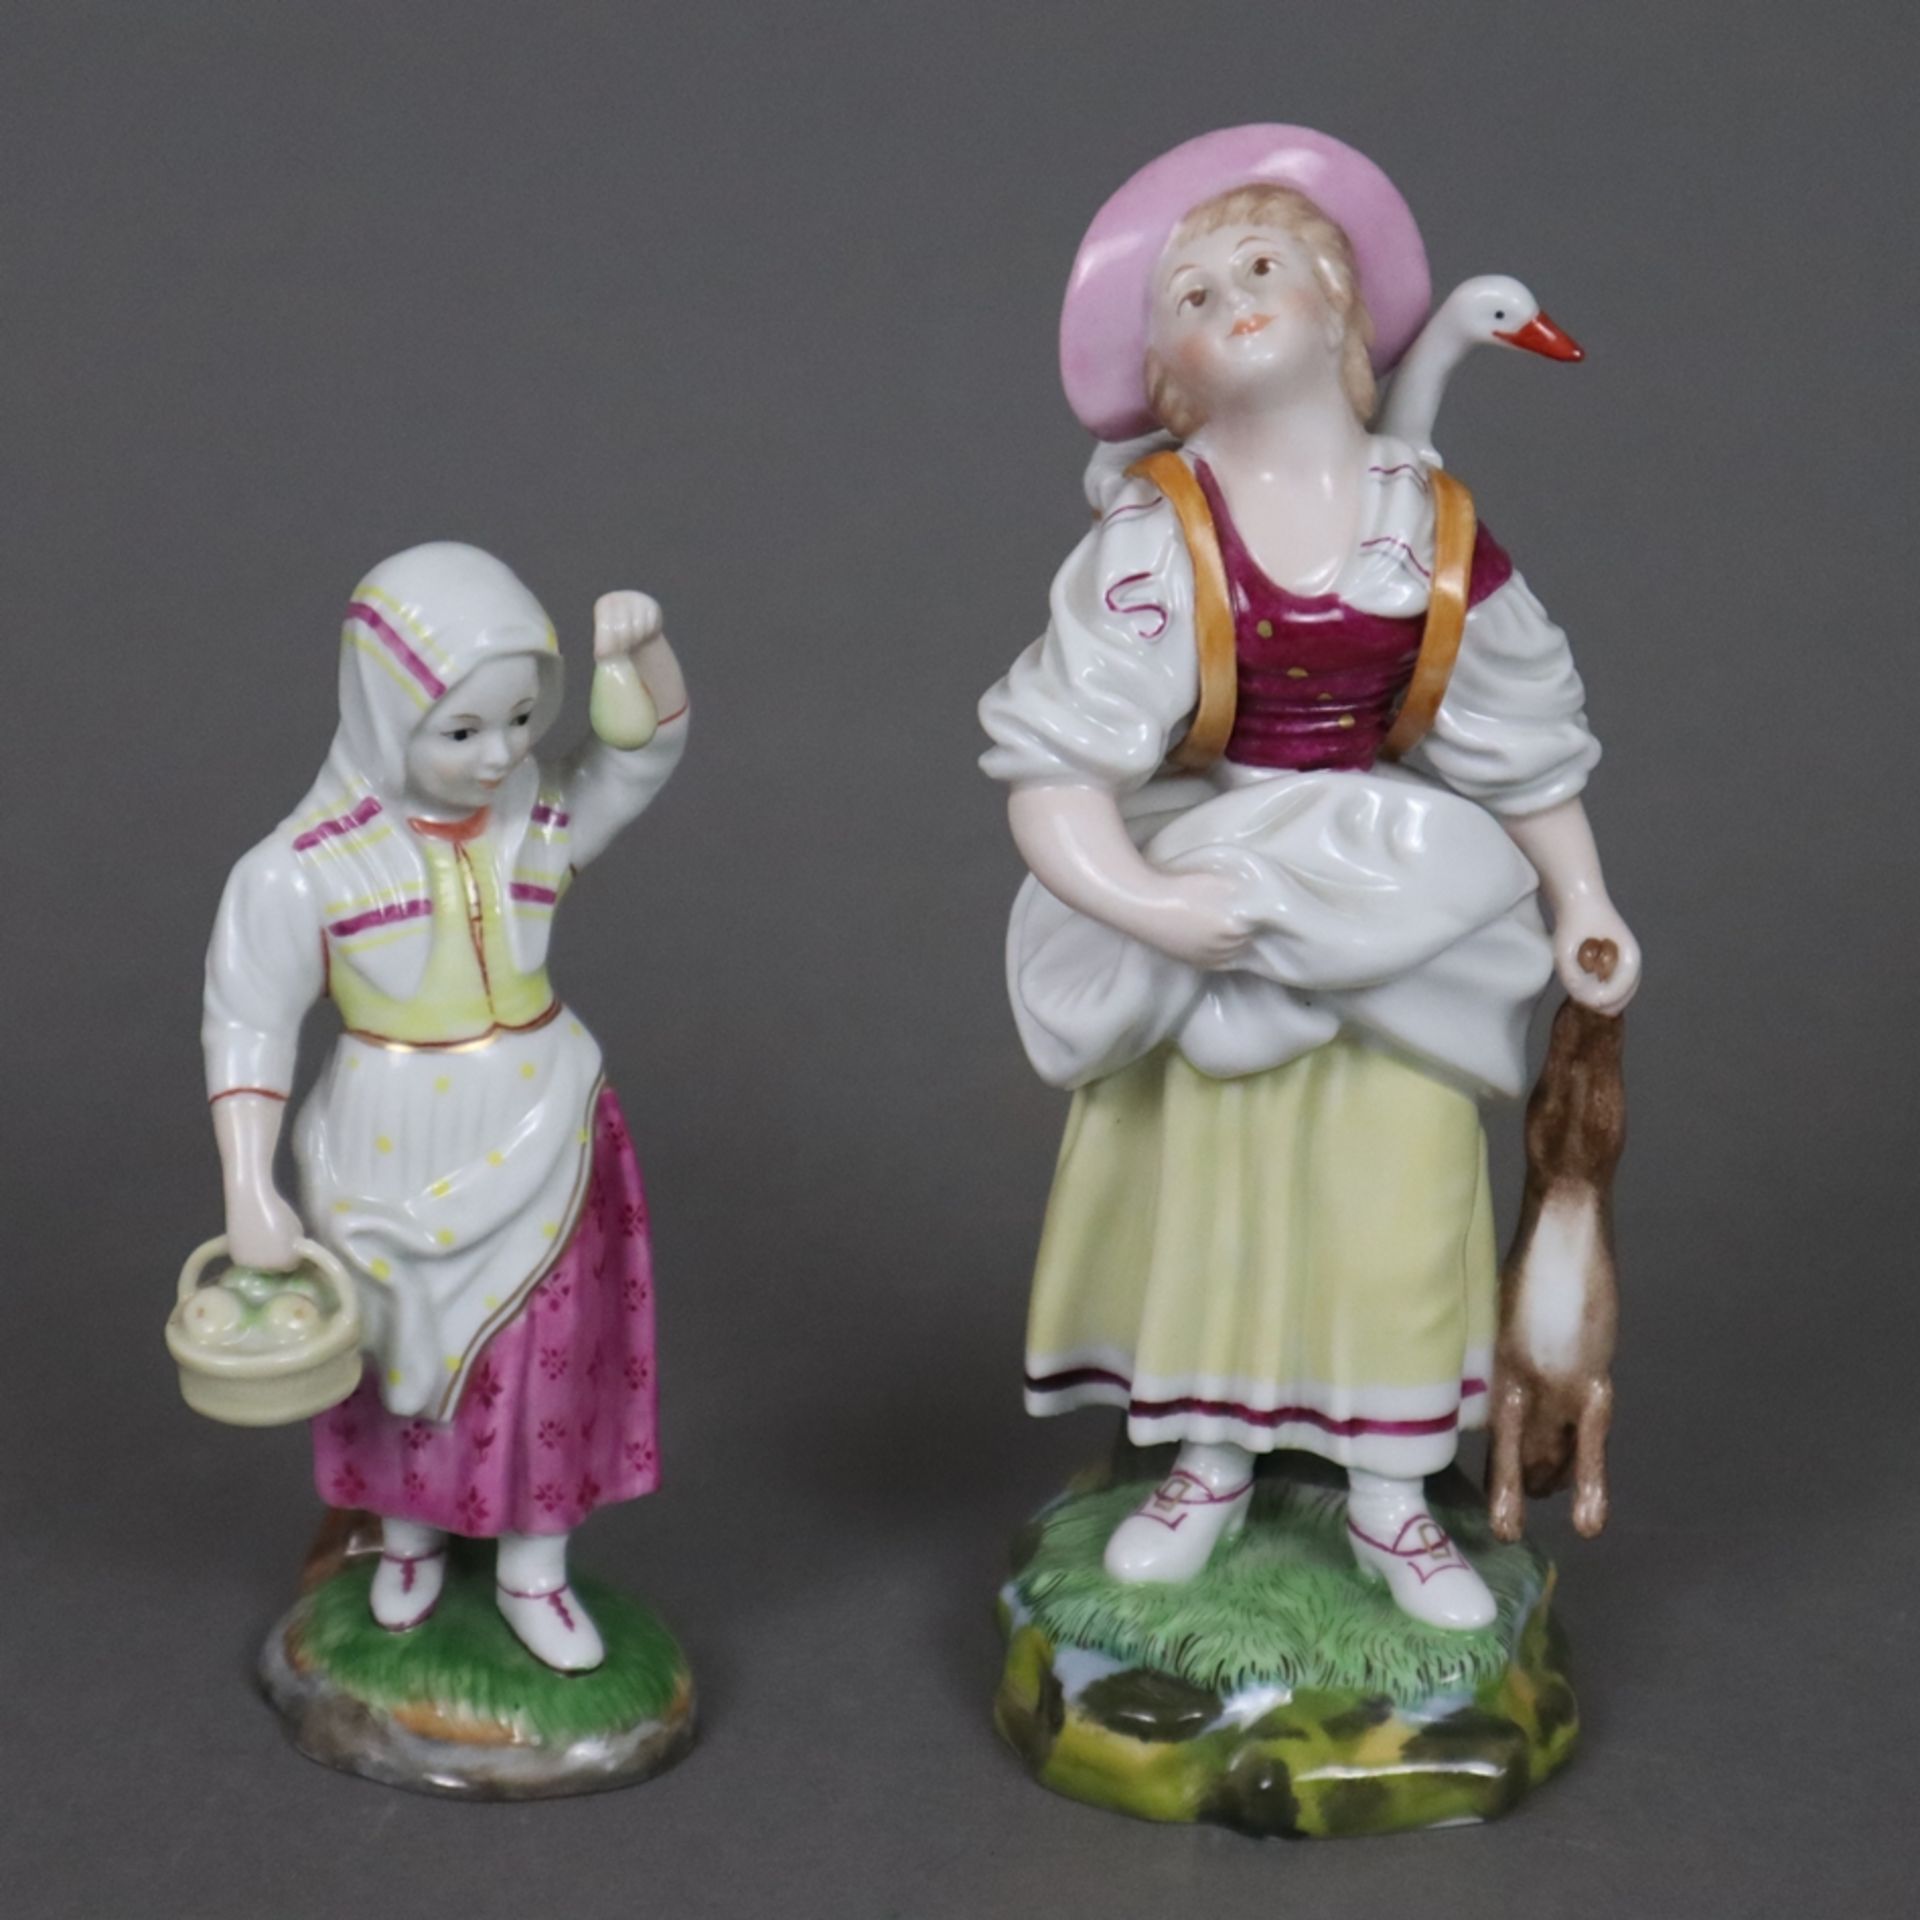 Zwei Porzellanfiguren - Hoechst, 20. Jh., Porzellan, polychrom bemalt, 1x junge Bäuerin mit erlegte